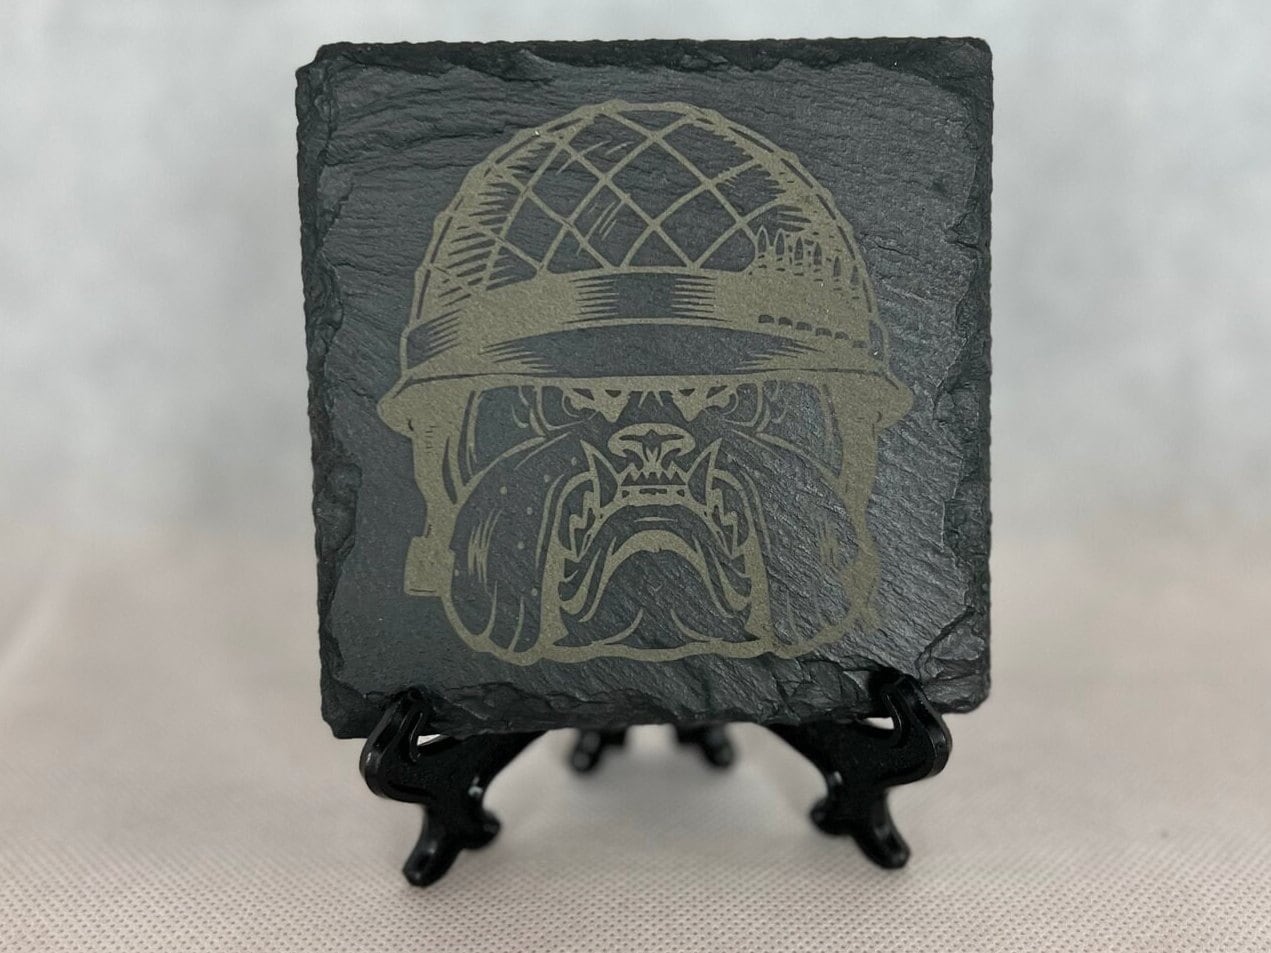 Laser Engraved Slate Coaster with the United States Marines Devil Dog